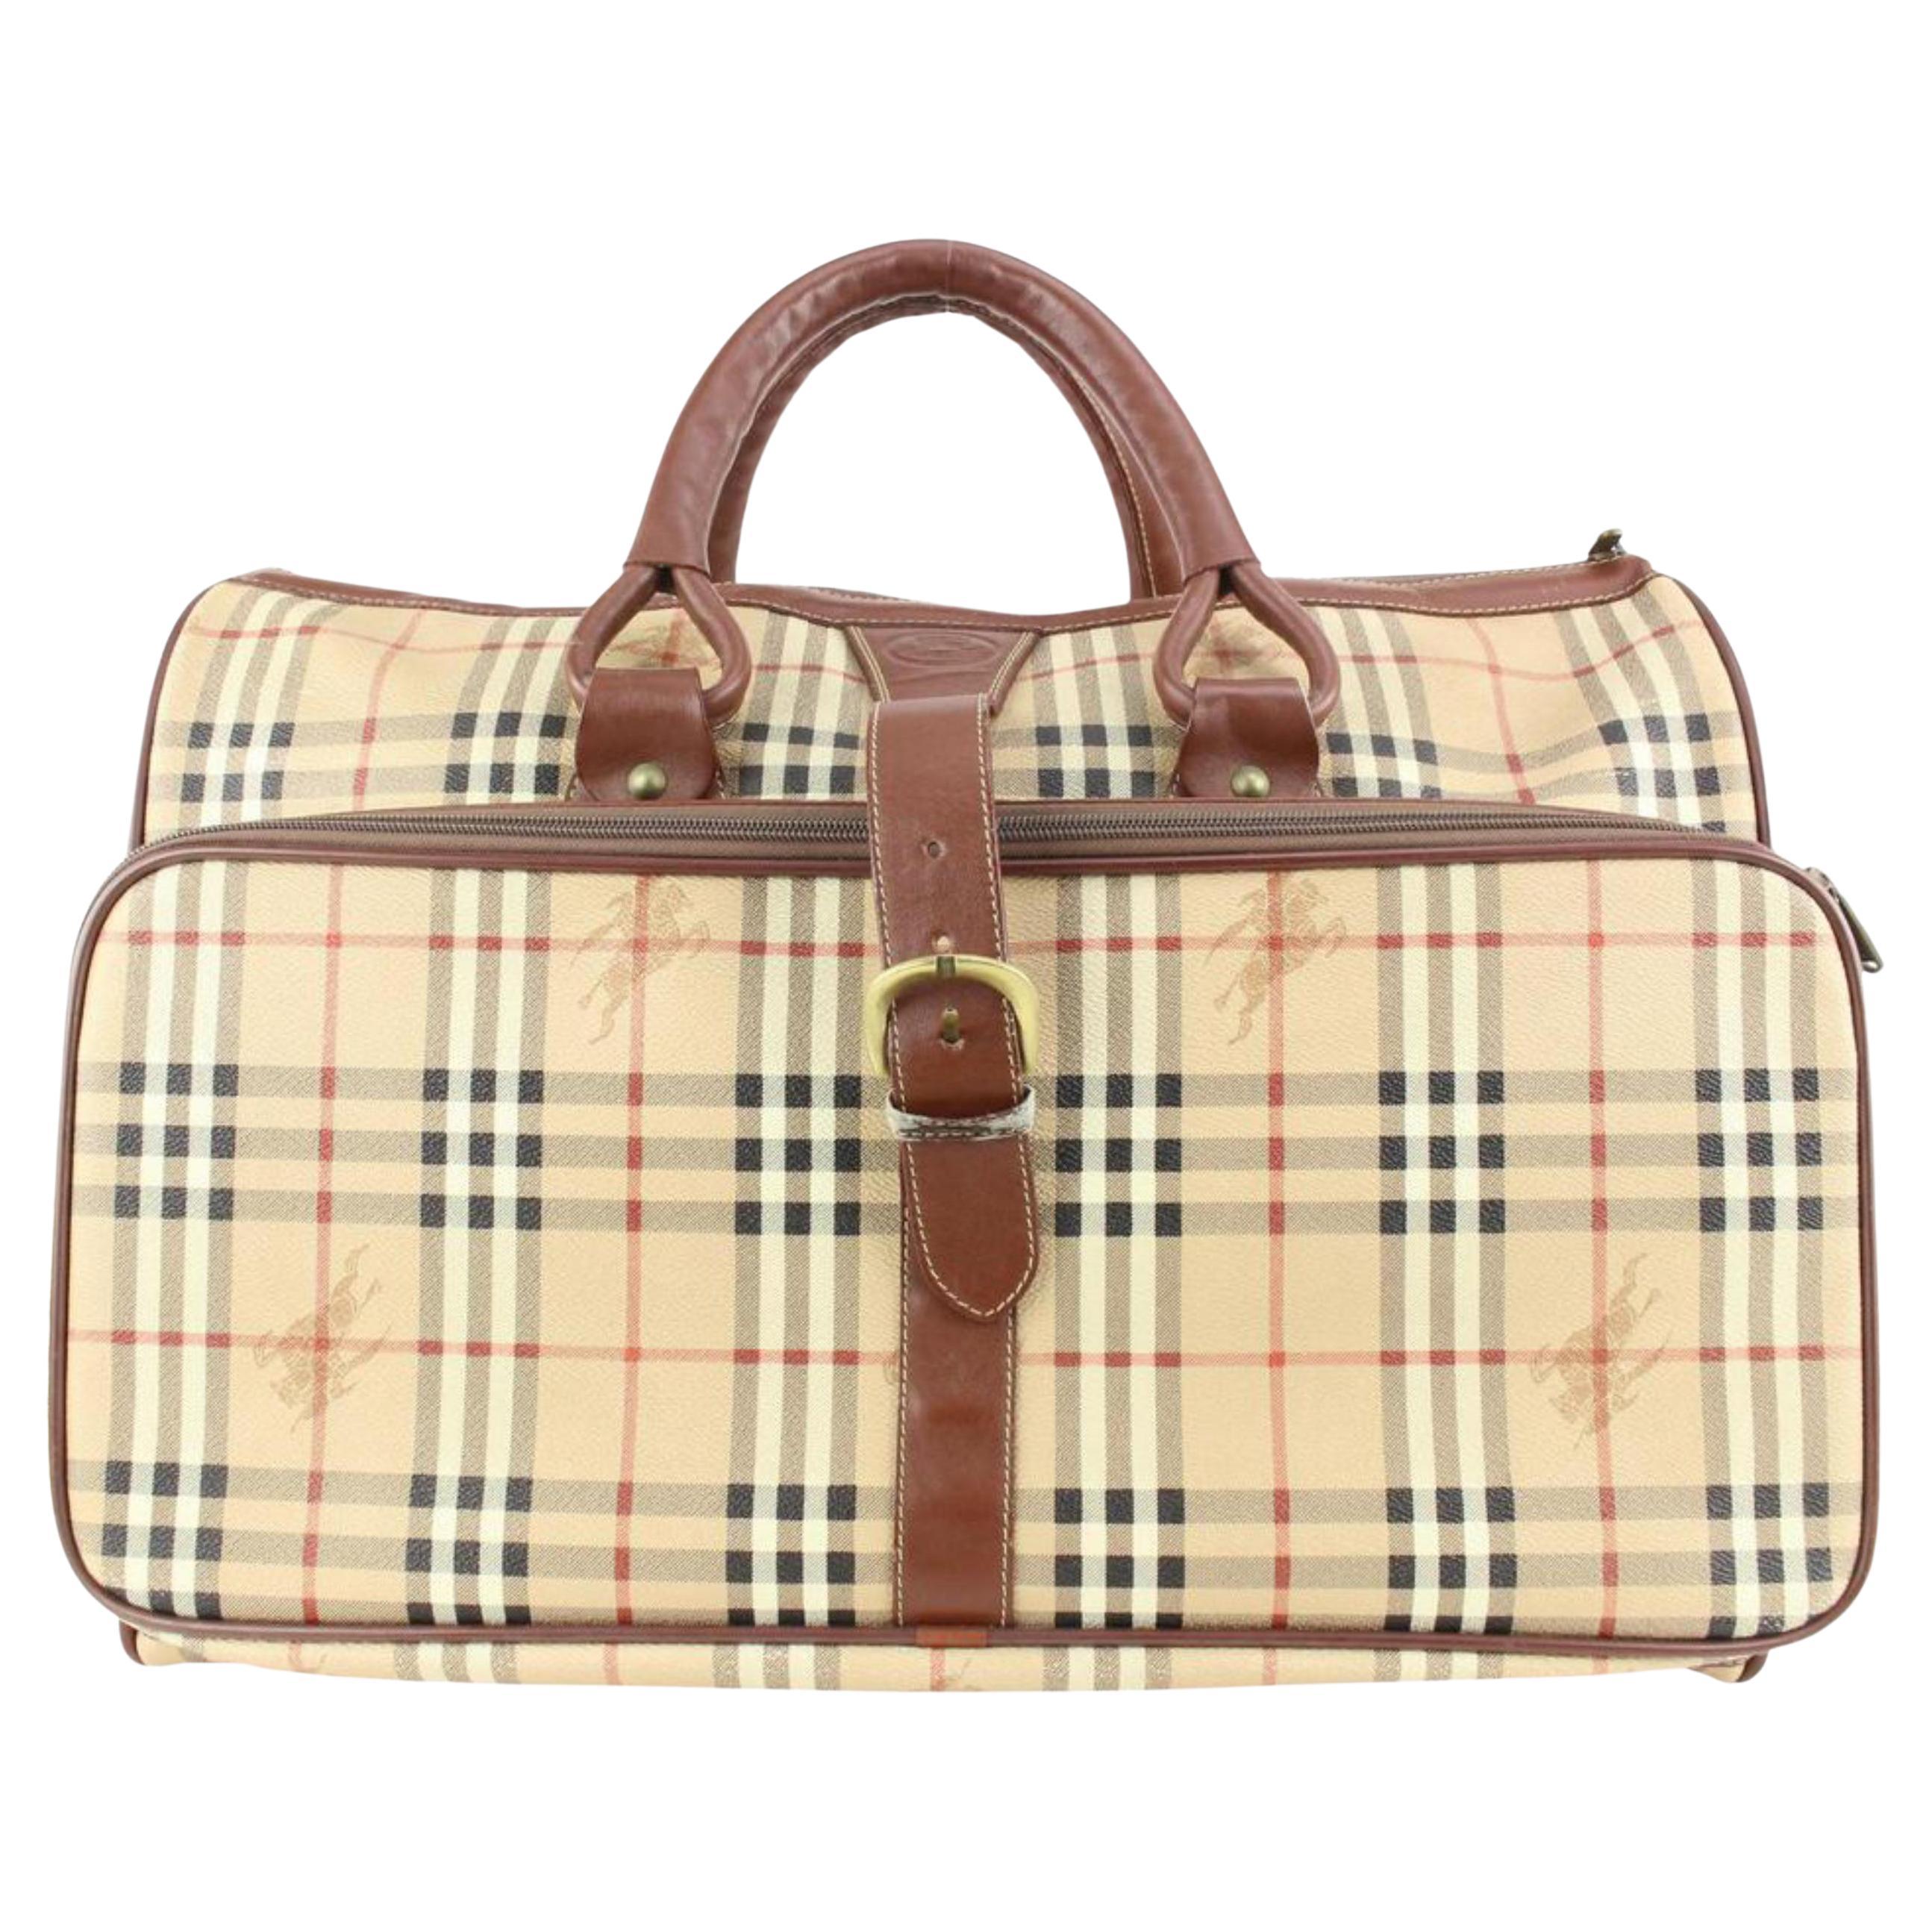 Burberry Beige Nova Check Travel Duffle Bag 113b54